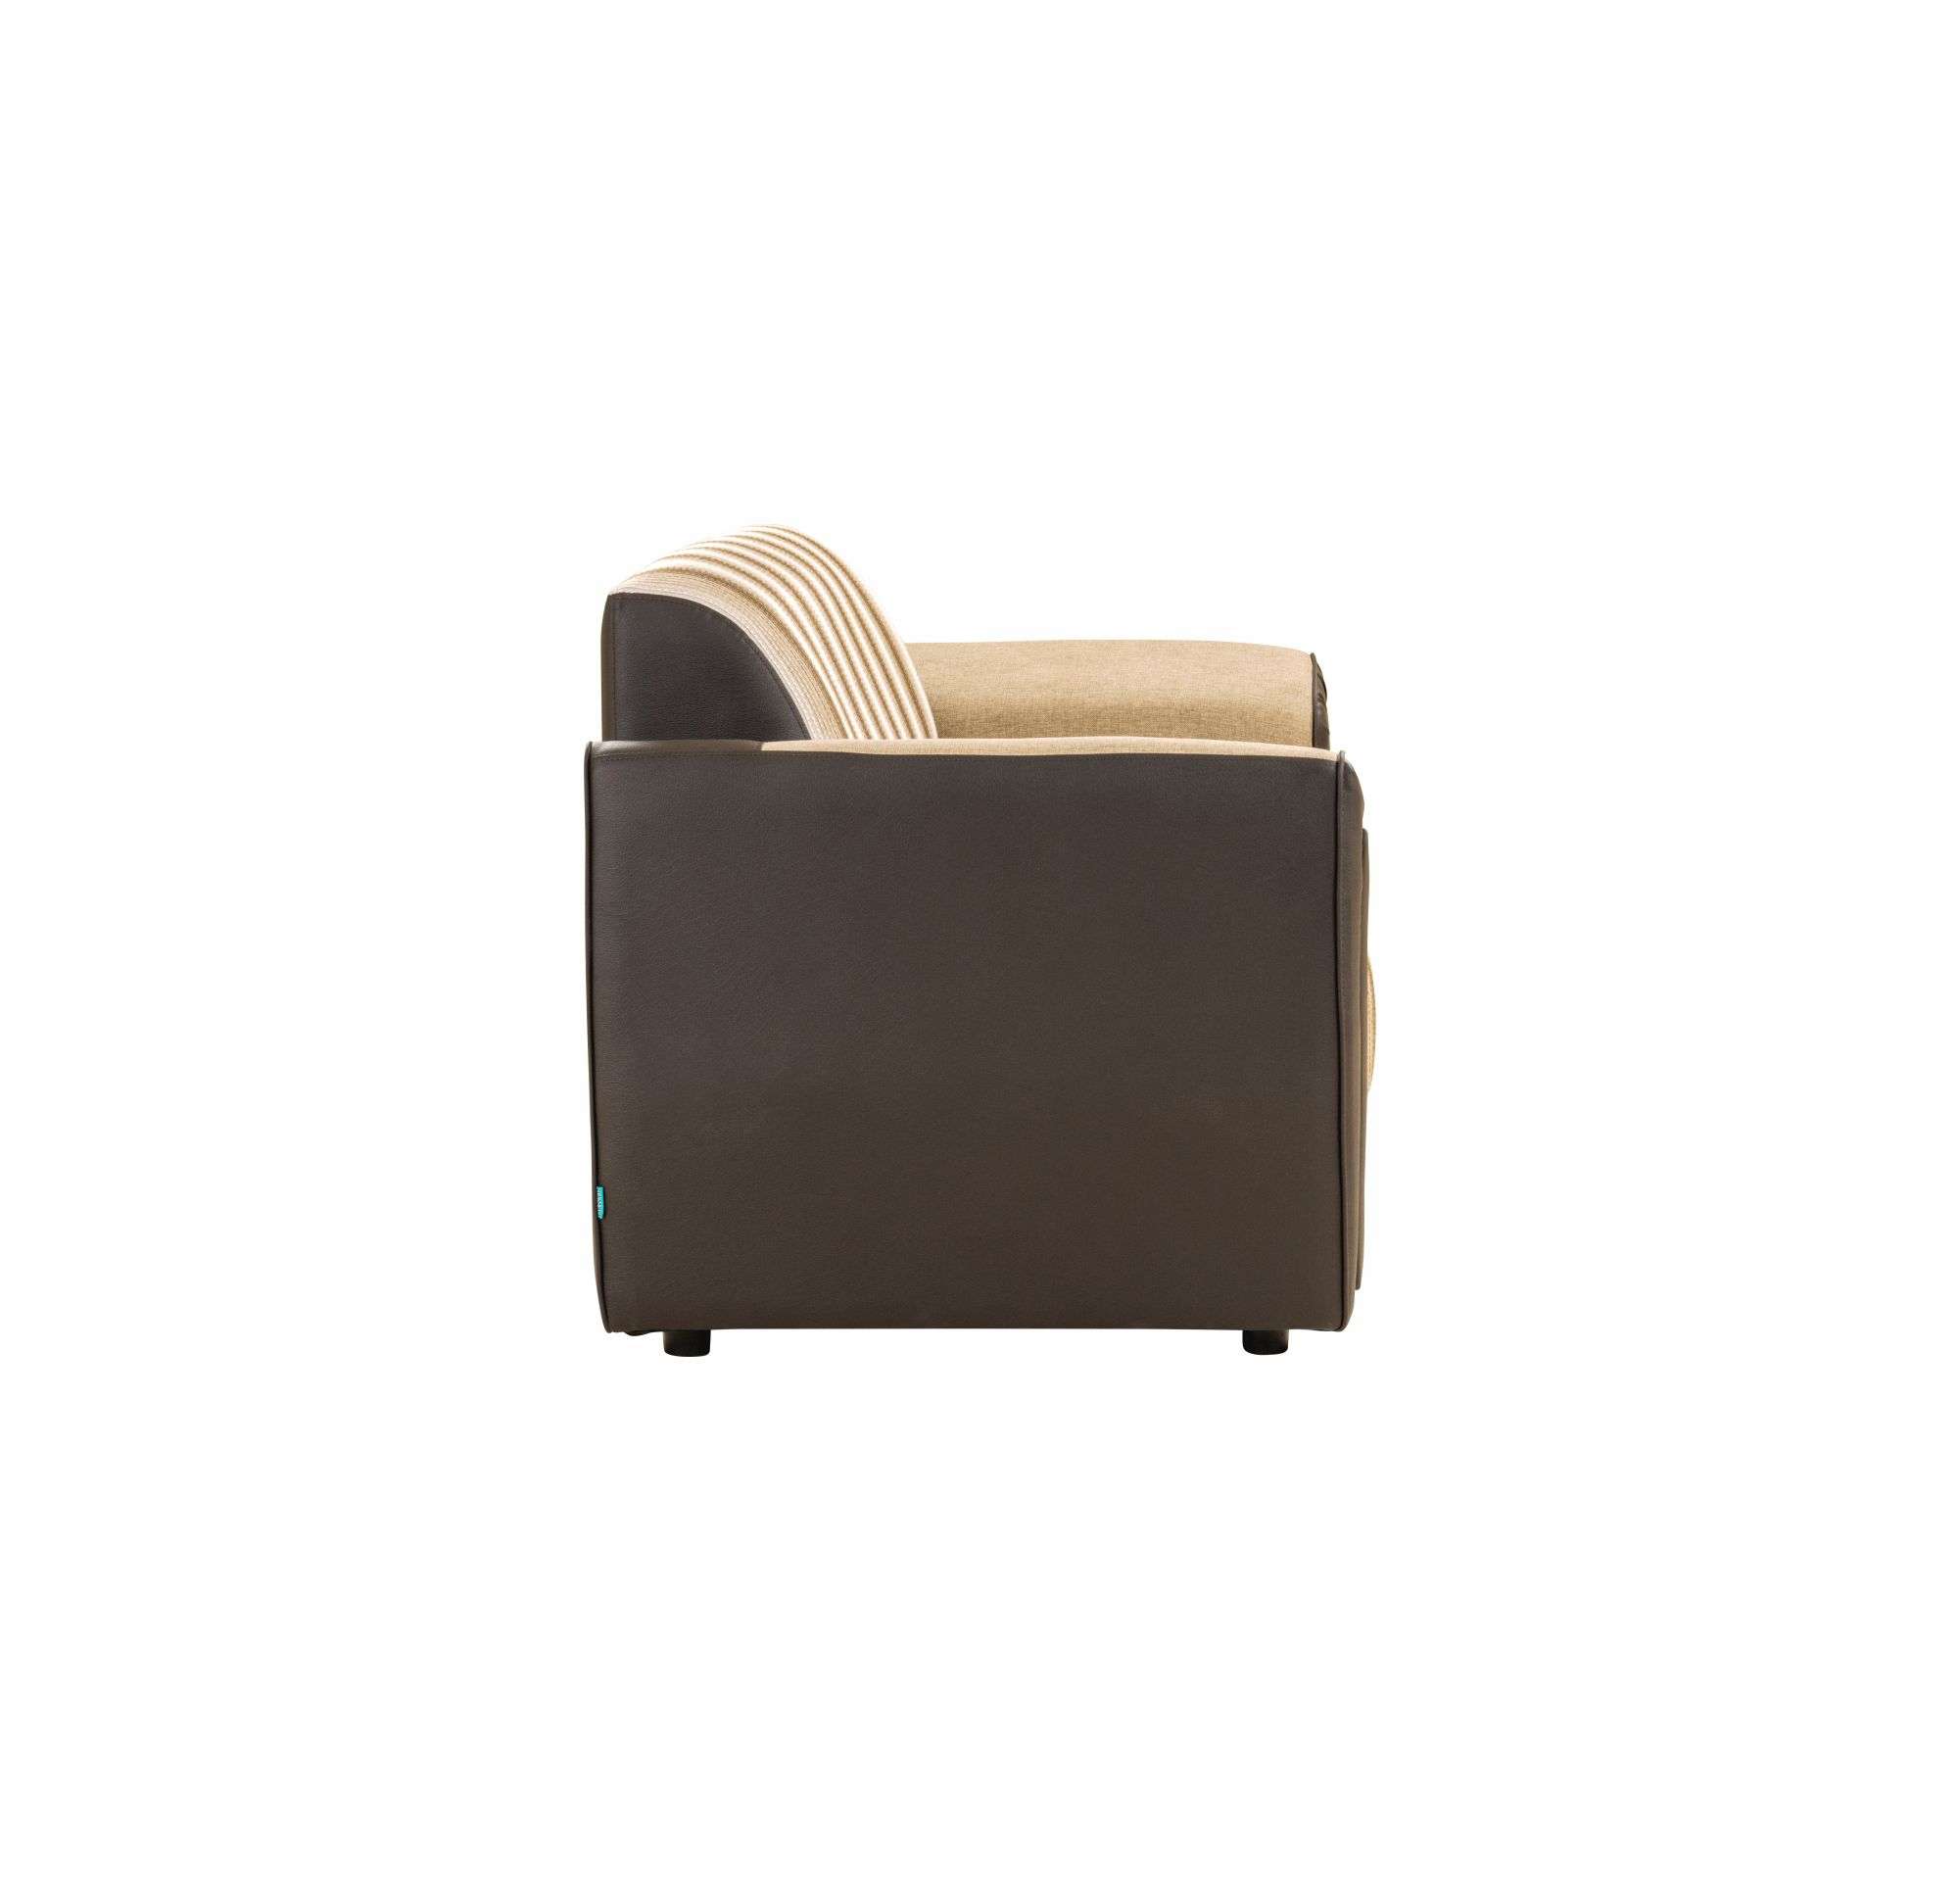 SRX003-Roxy Sofa 3 Seater-EAL03/NP01/NQ01